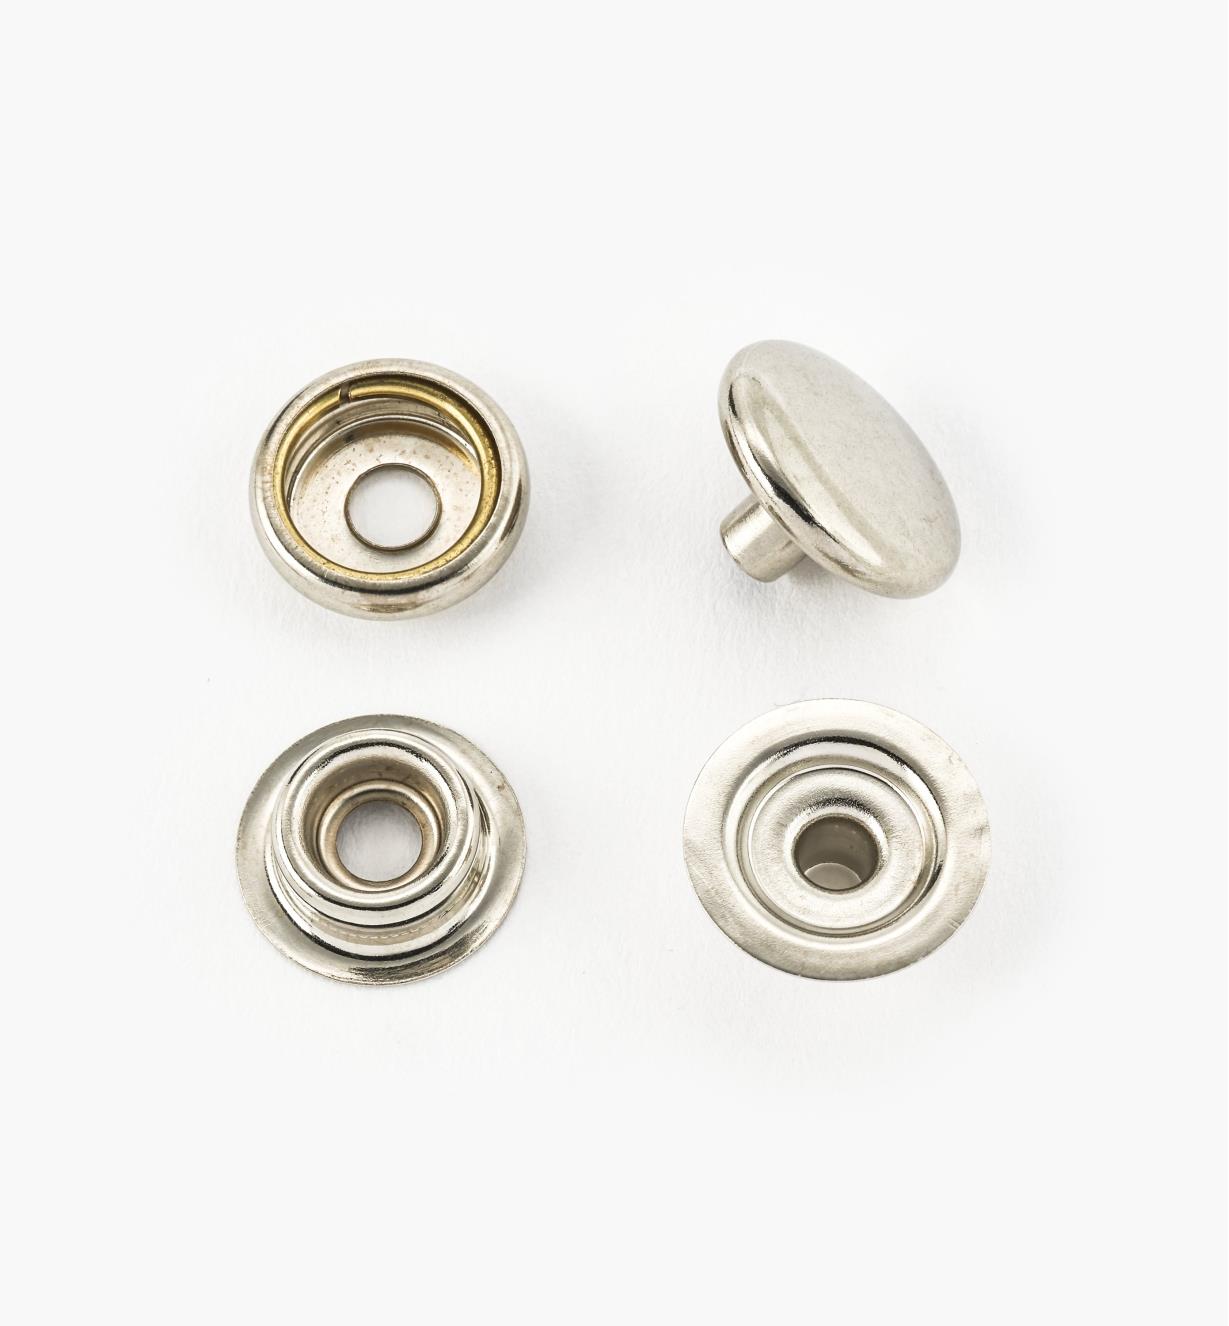 97K0990 - CS Osborne Nickel-Plated Brass 5/8" Snap Buttons (25)